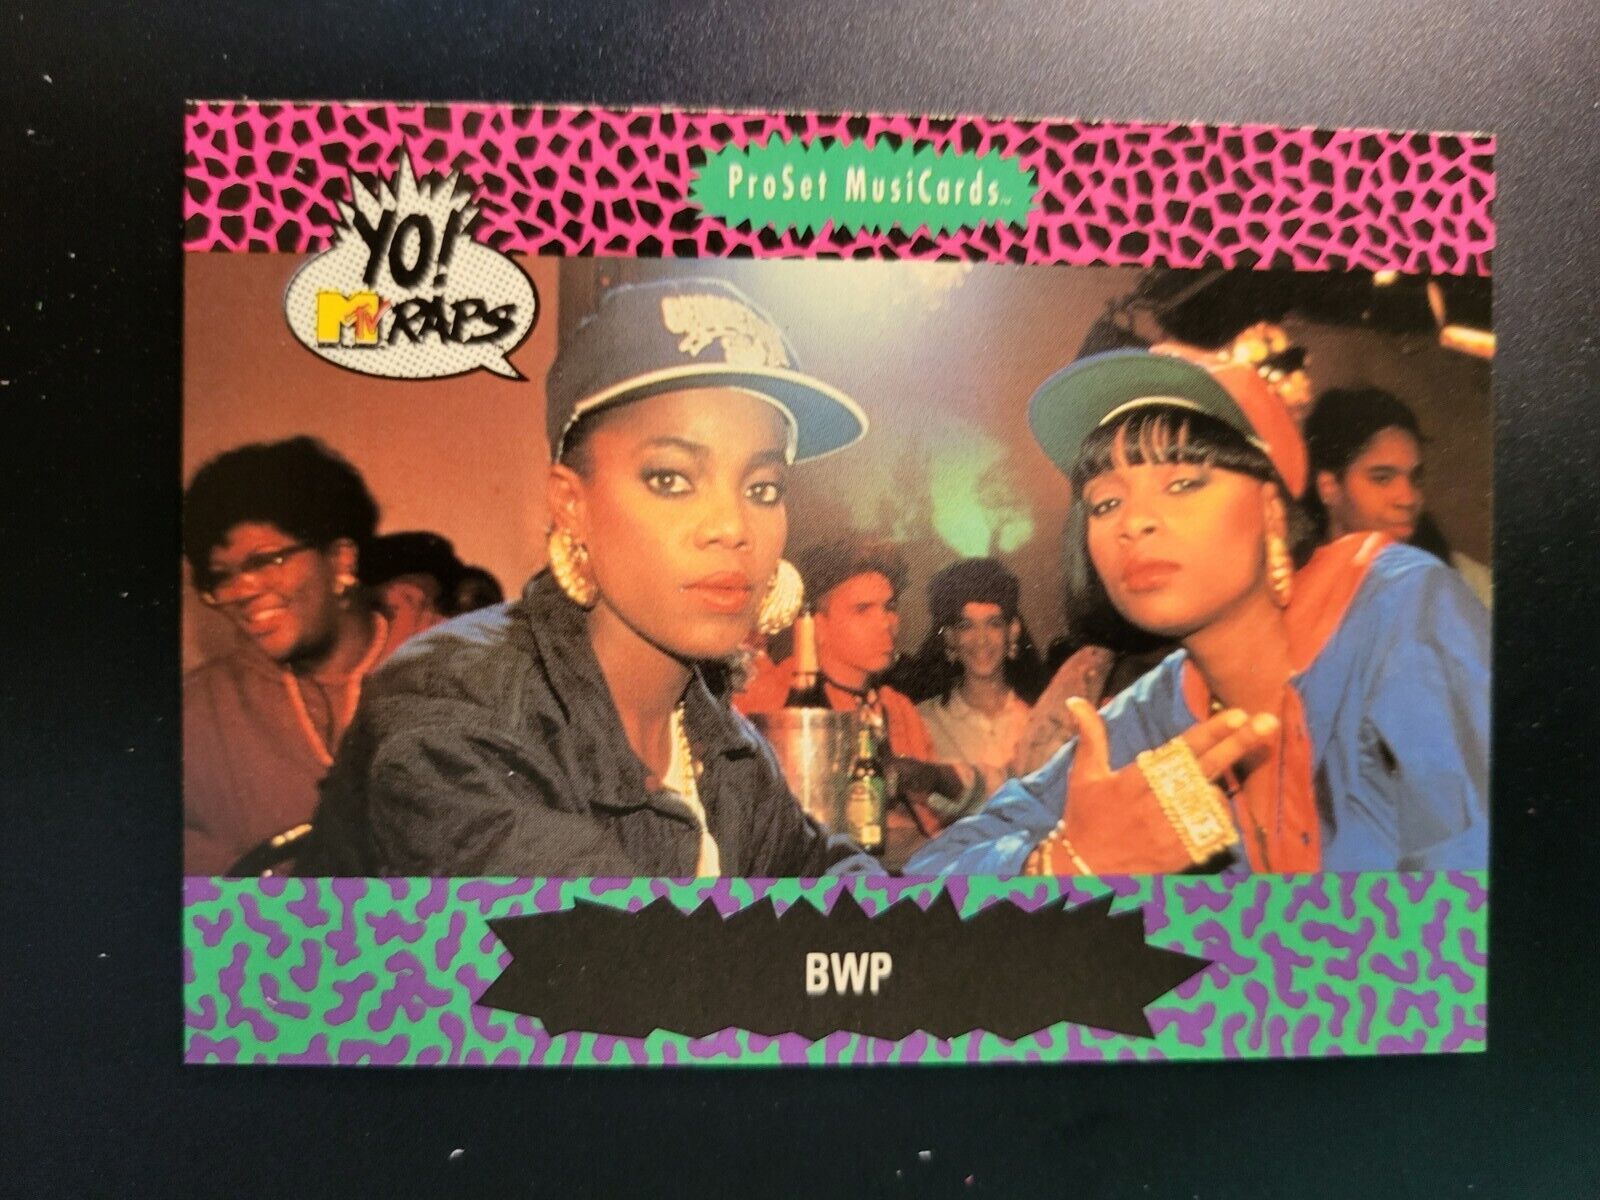 1991 ProSet MusiCards YO MTV Raps BWP RC card #108